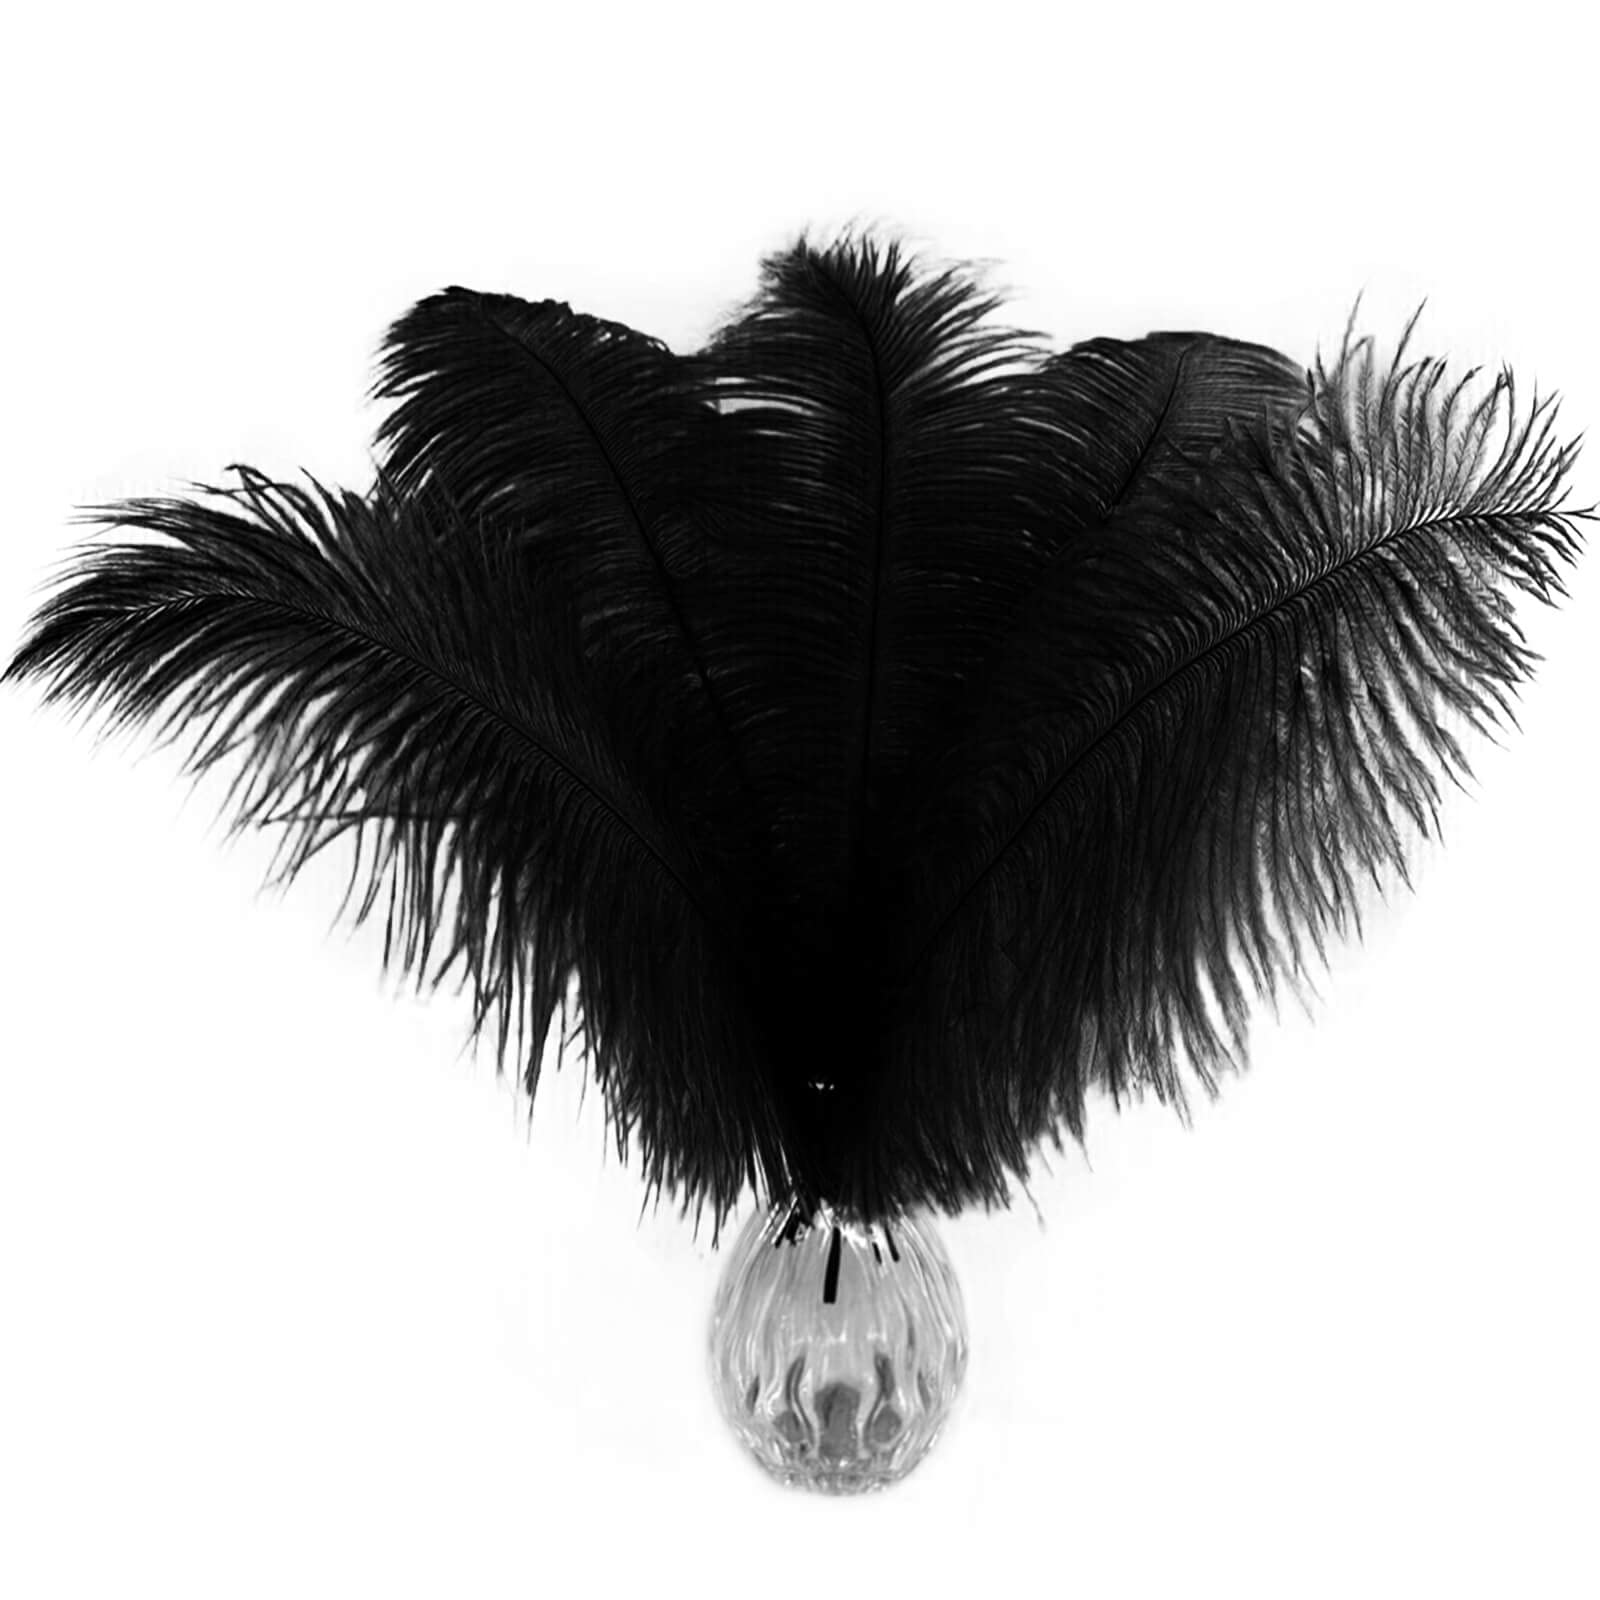 Piokio 20 pcs Black Ostrich Feathers Plumes 12-14 inch(30-35 cm) Bulk for  DIY Halloween Decorations Wedding Party Centerpieces Gatsby Decorations  Black 20 pcs